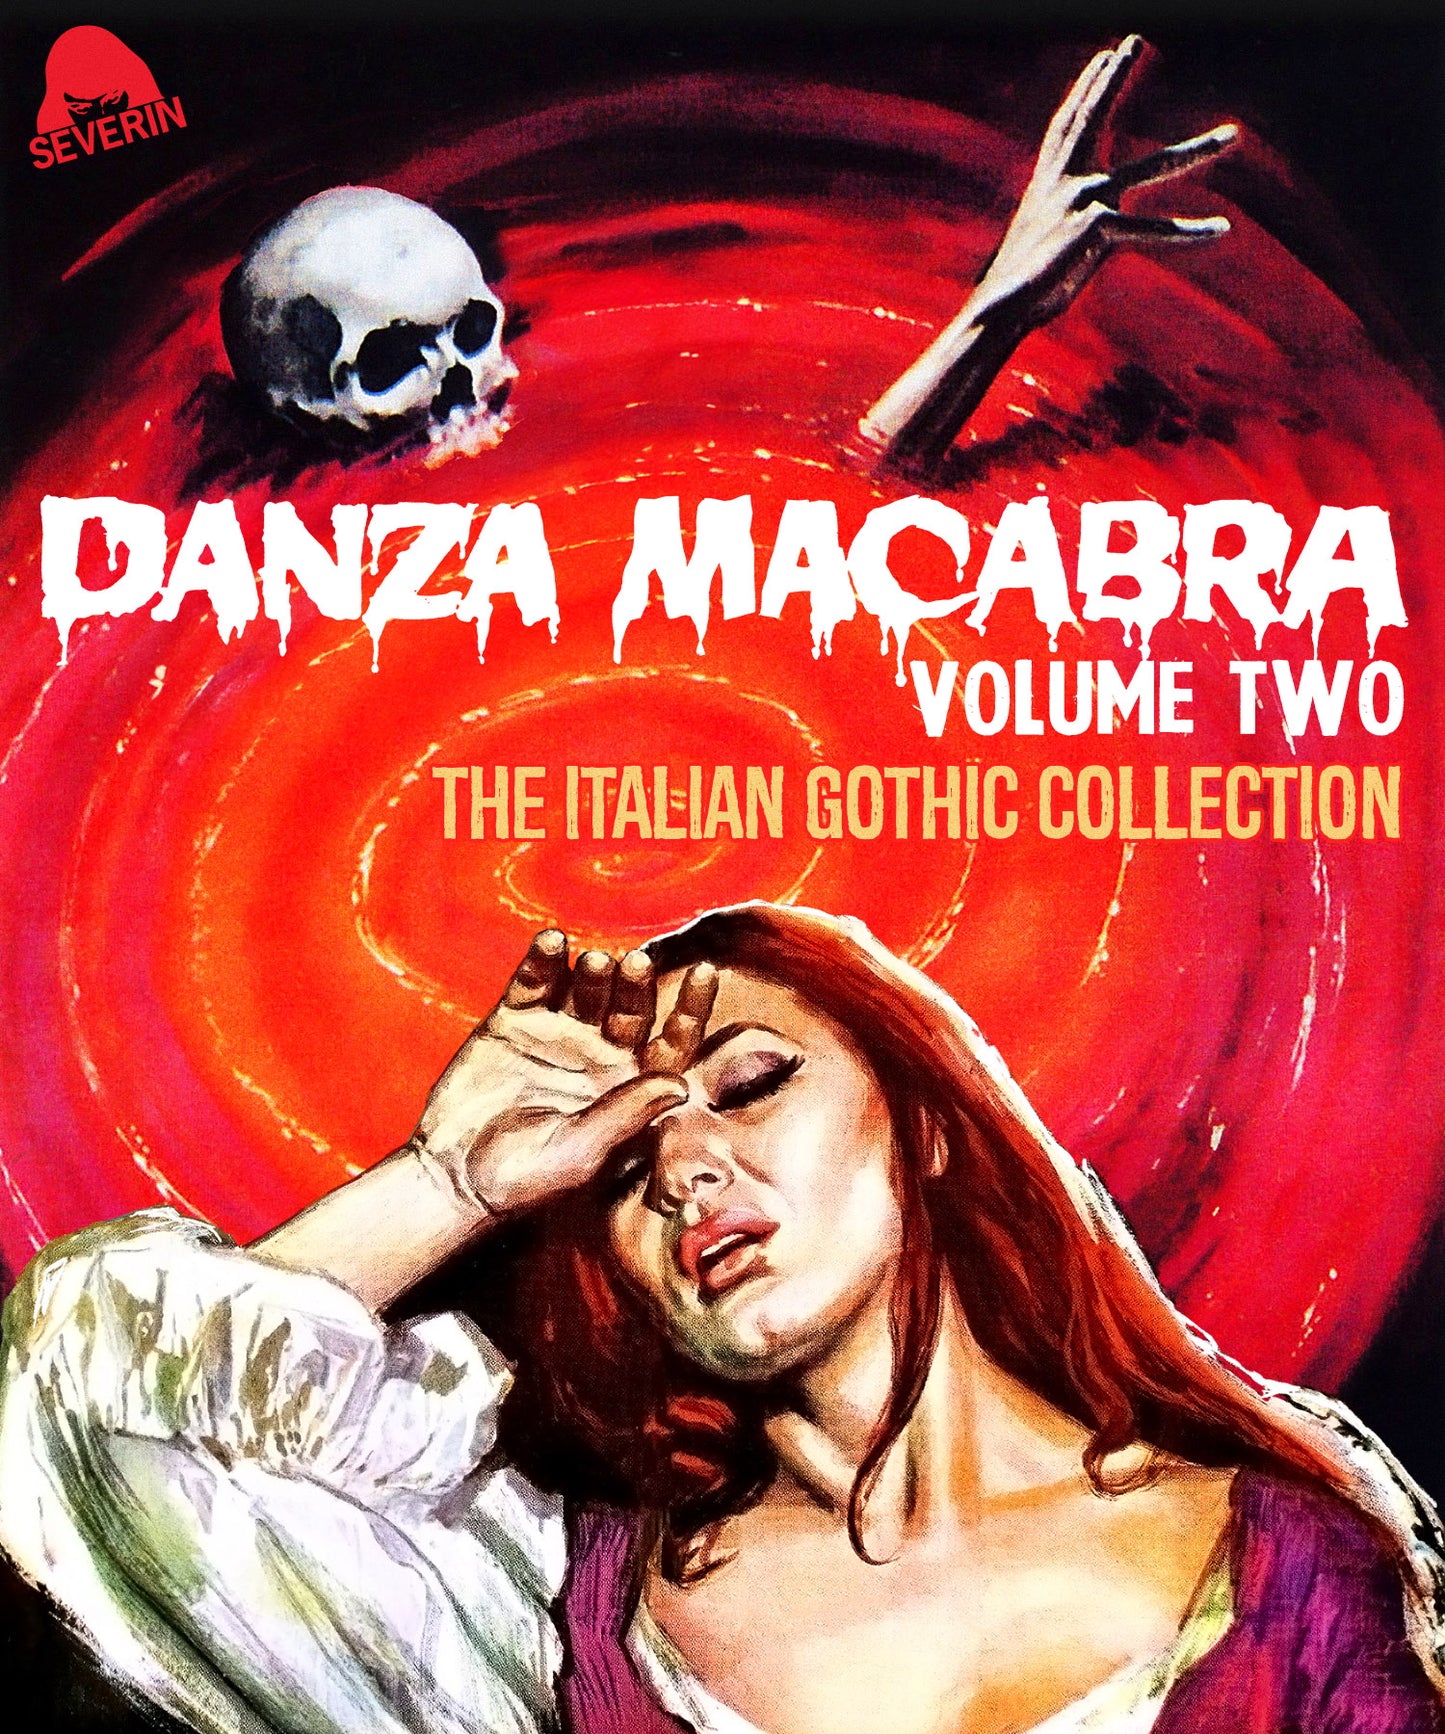 Danza Macabra Volume Two: The Italian Gothic Collection 4K UHD + Blu-ray + CD (Severin U.S.)